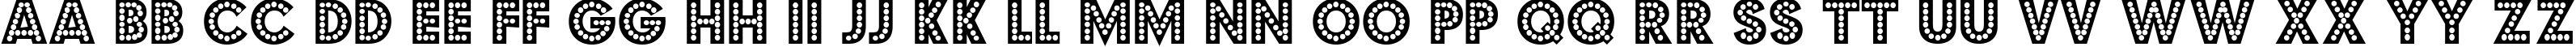 Пример написания английского алфавита шрифтом Budmo Jiggler